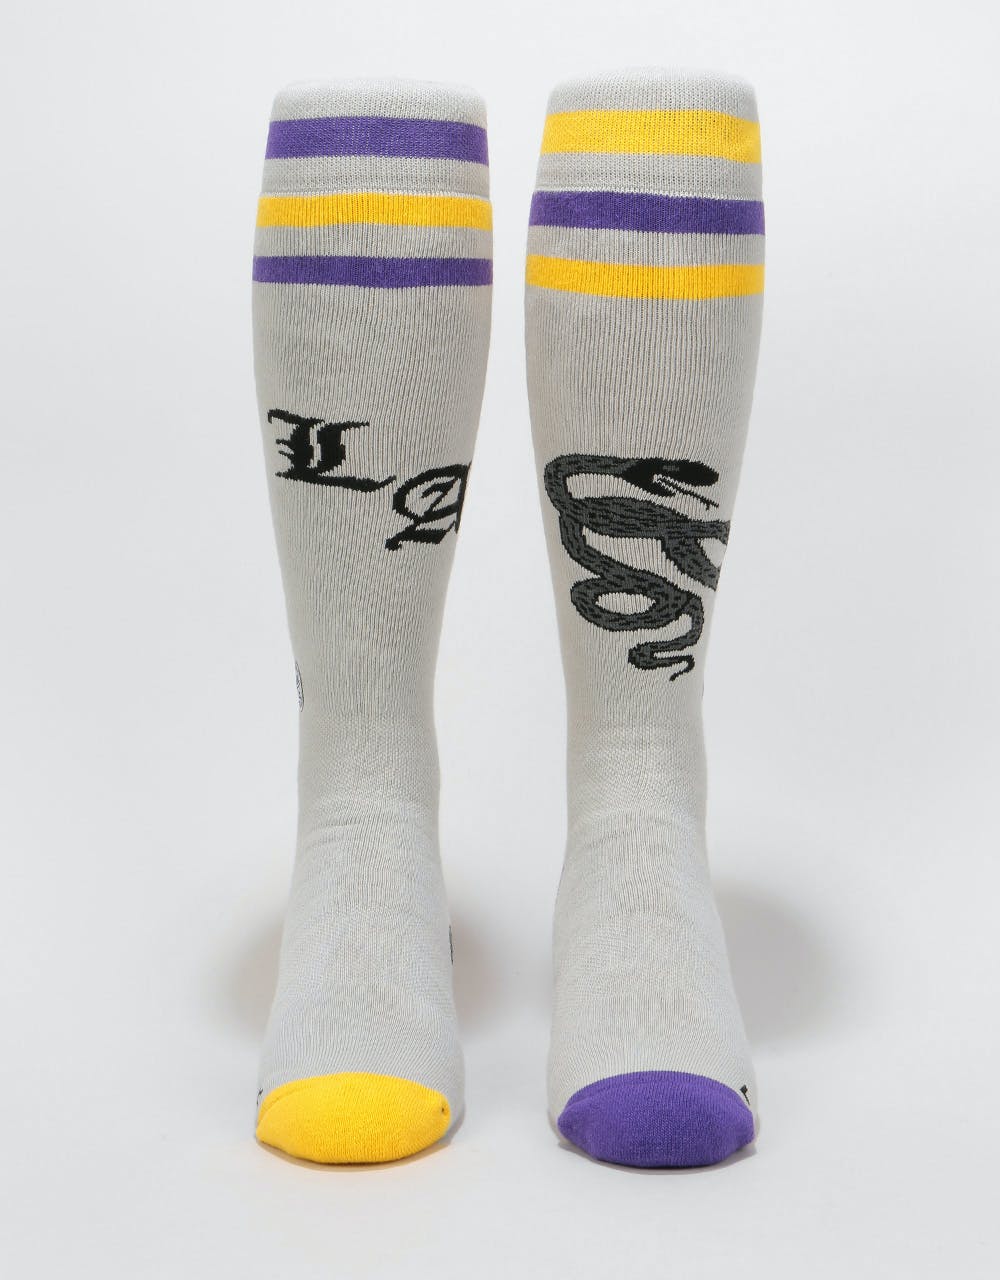 Stinky x Ashbury Eyewear Snowboard Socks - Grey/Yellow